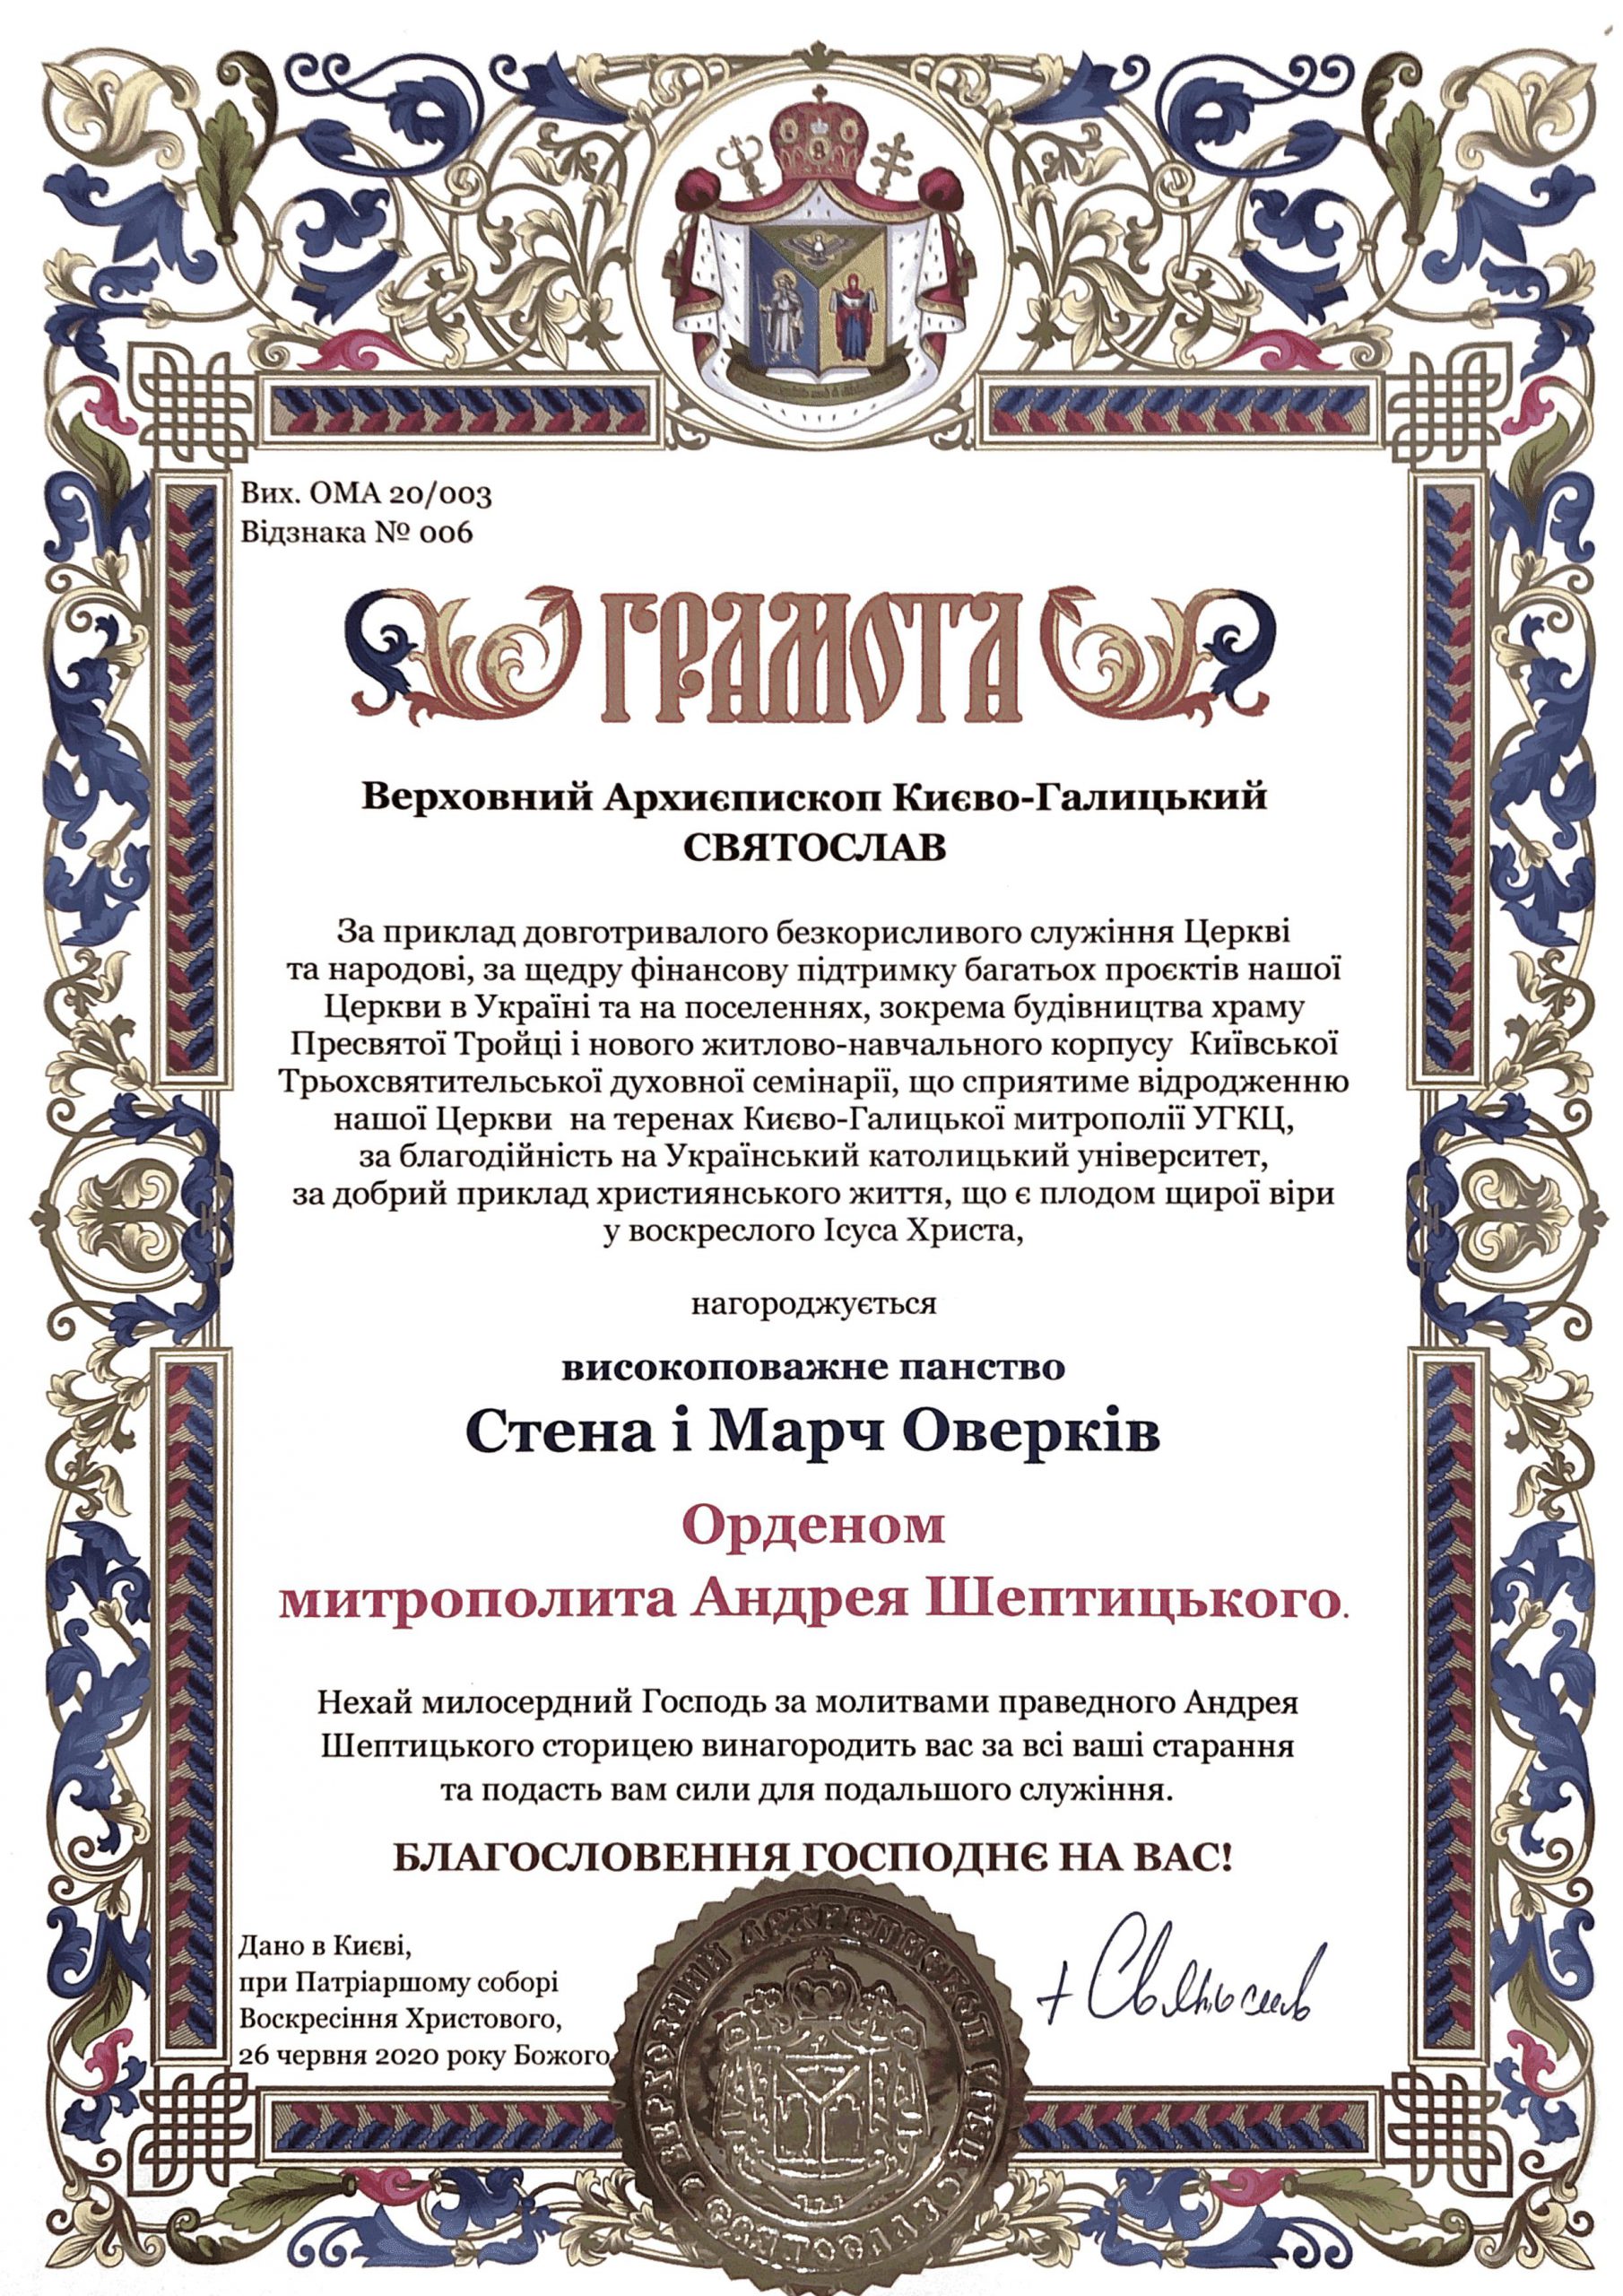 Order of Metropolitan Andrey Sheptytsky